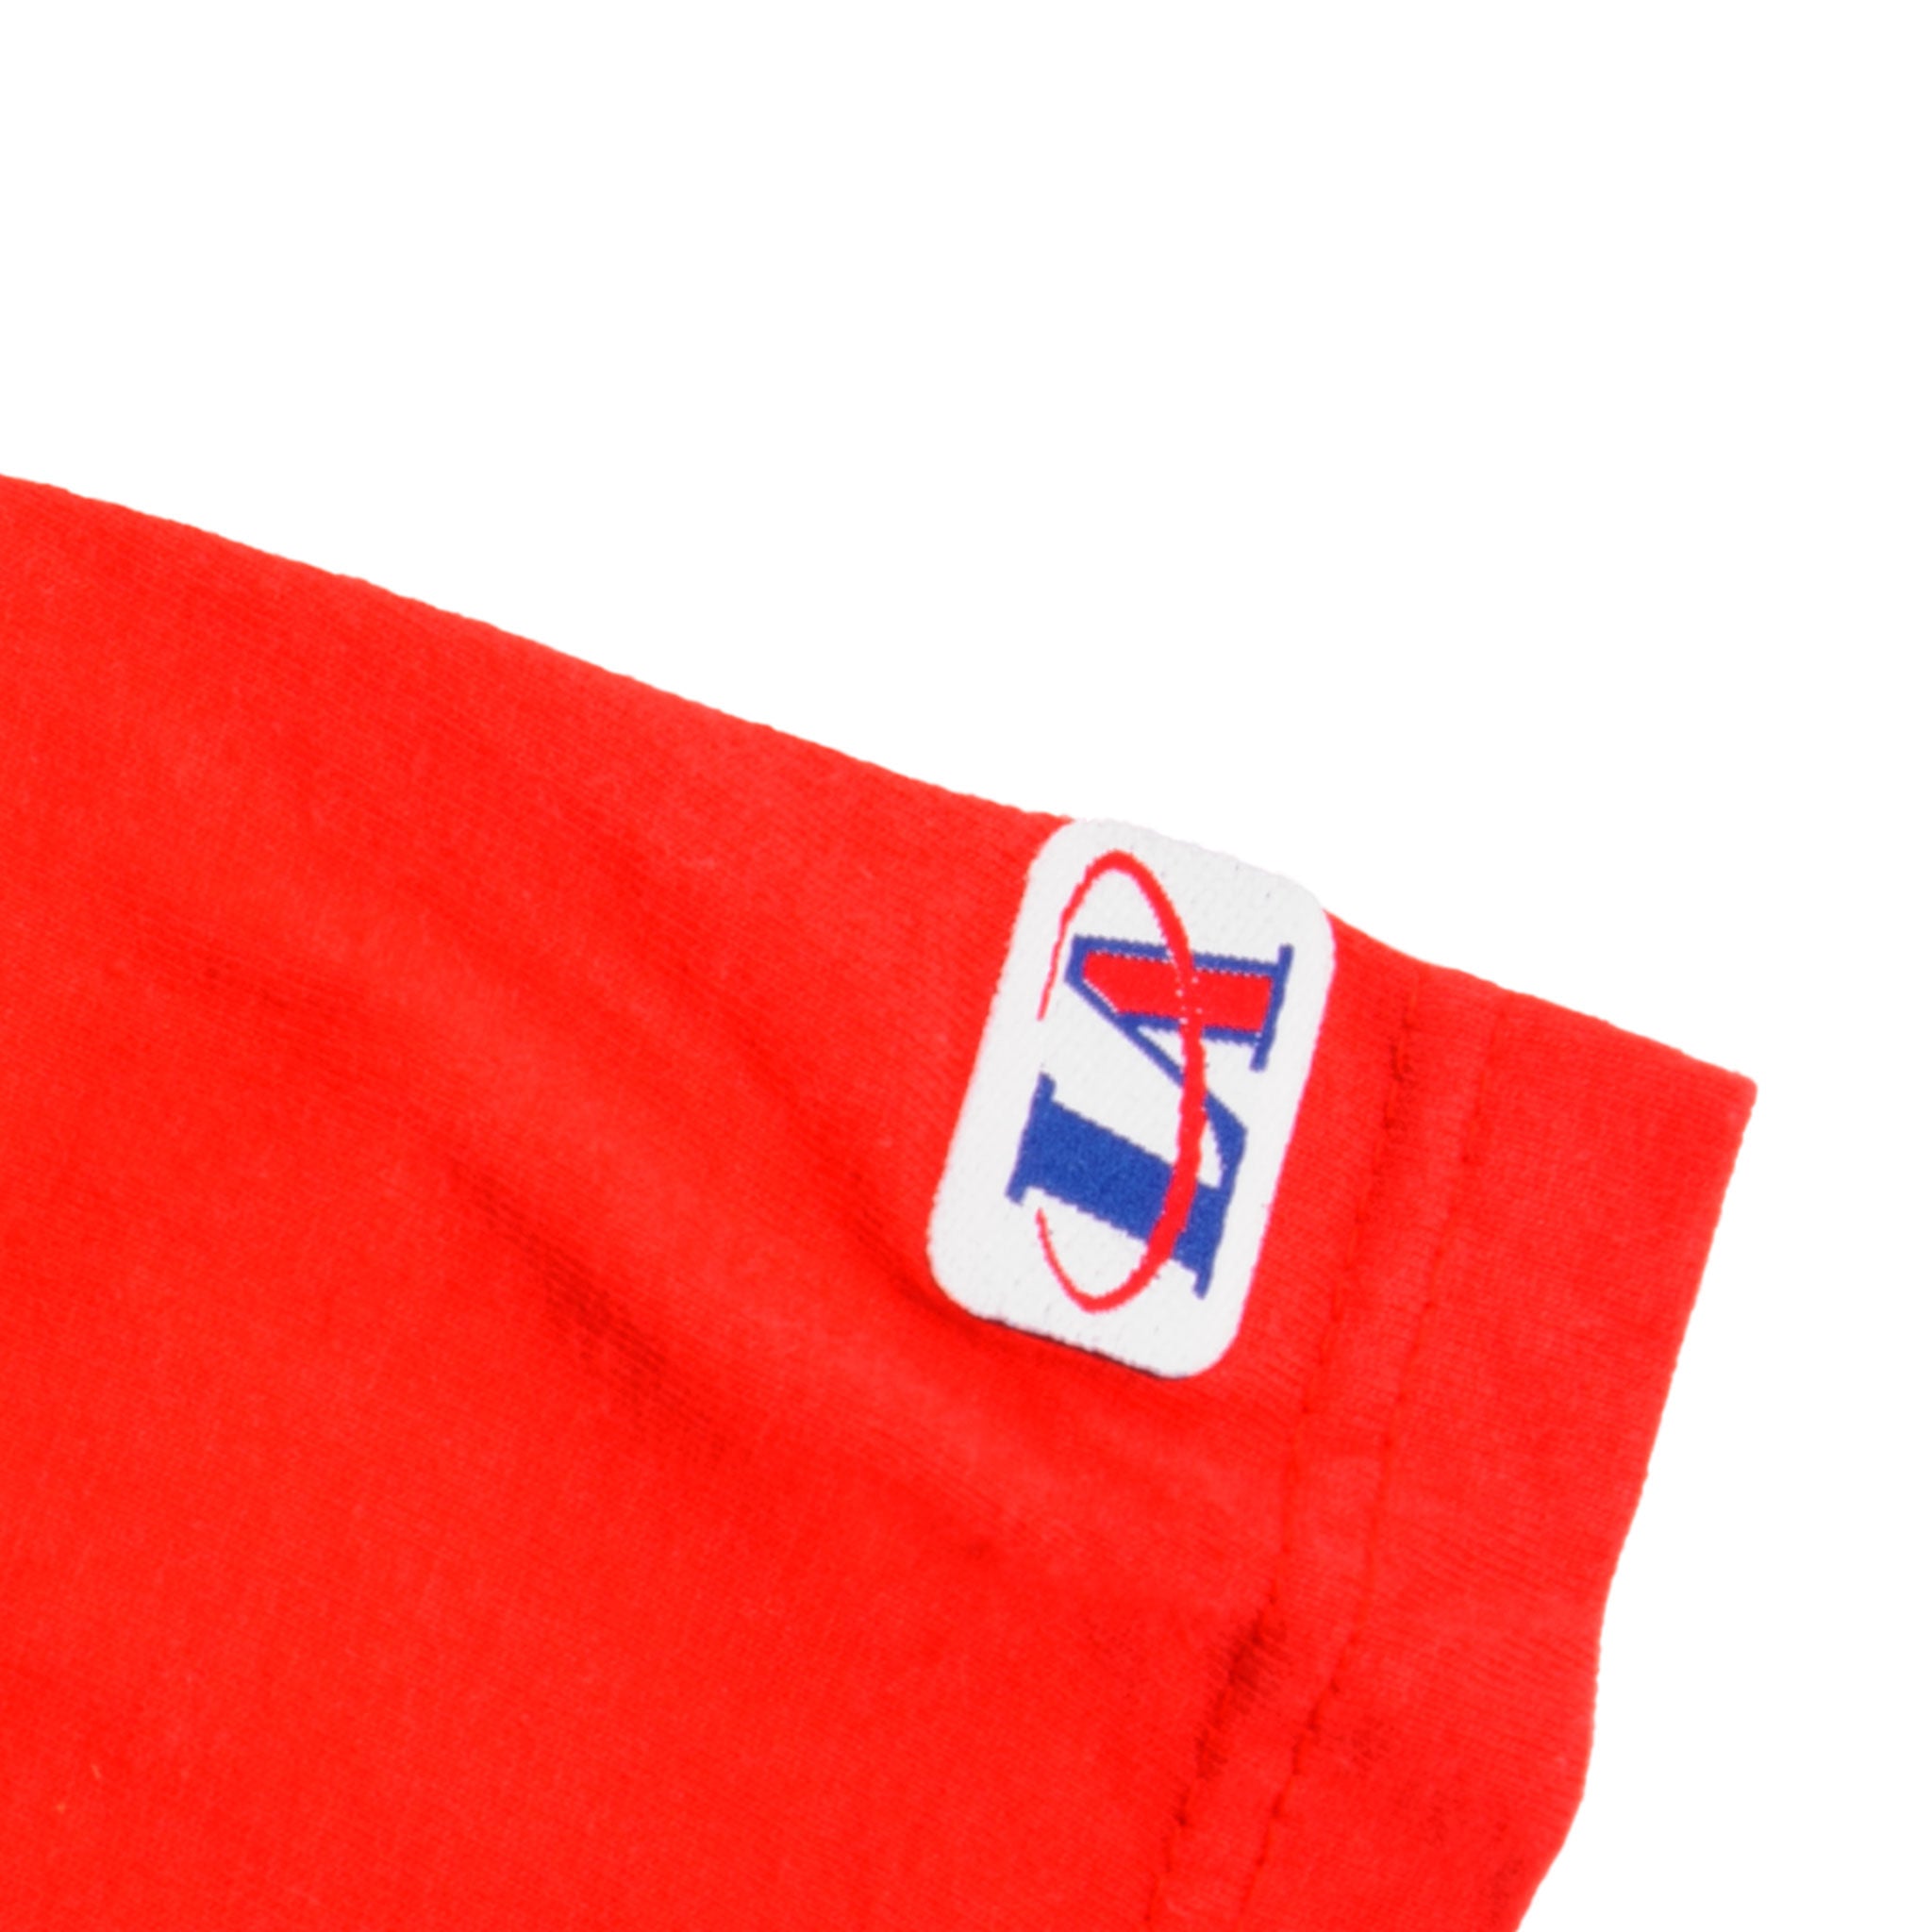 Vintage 90s Red NBA Houston Rockets Sweatshirt - Medium Cotton